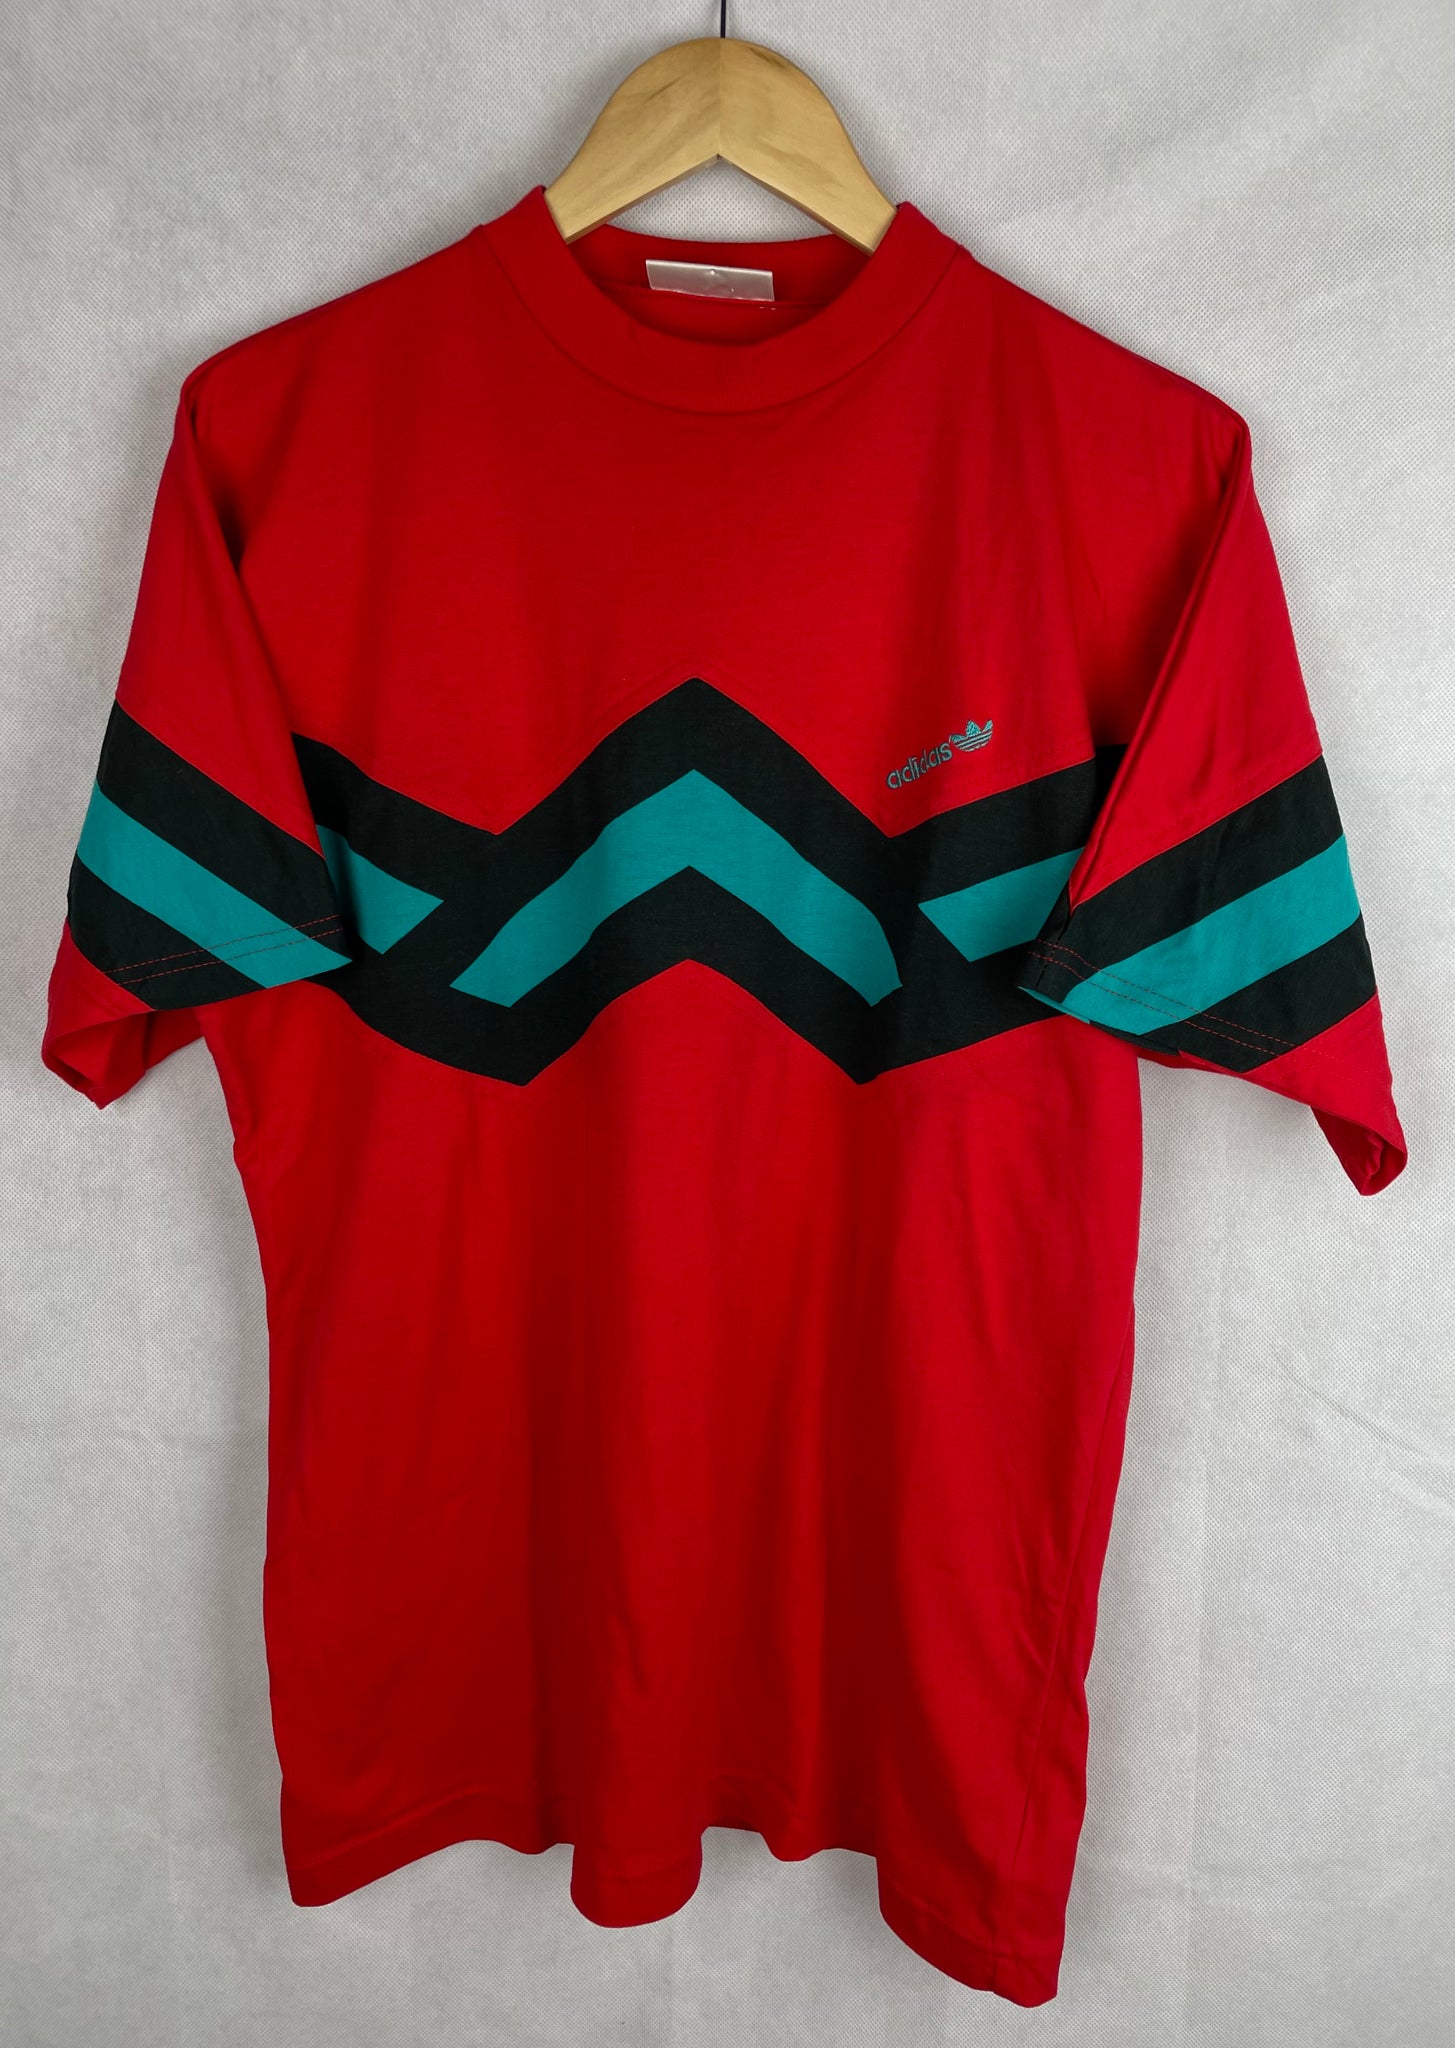 Vintage Adidas T-Shirt Gr. M